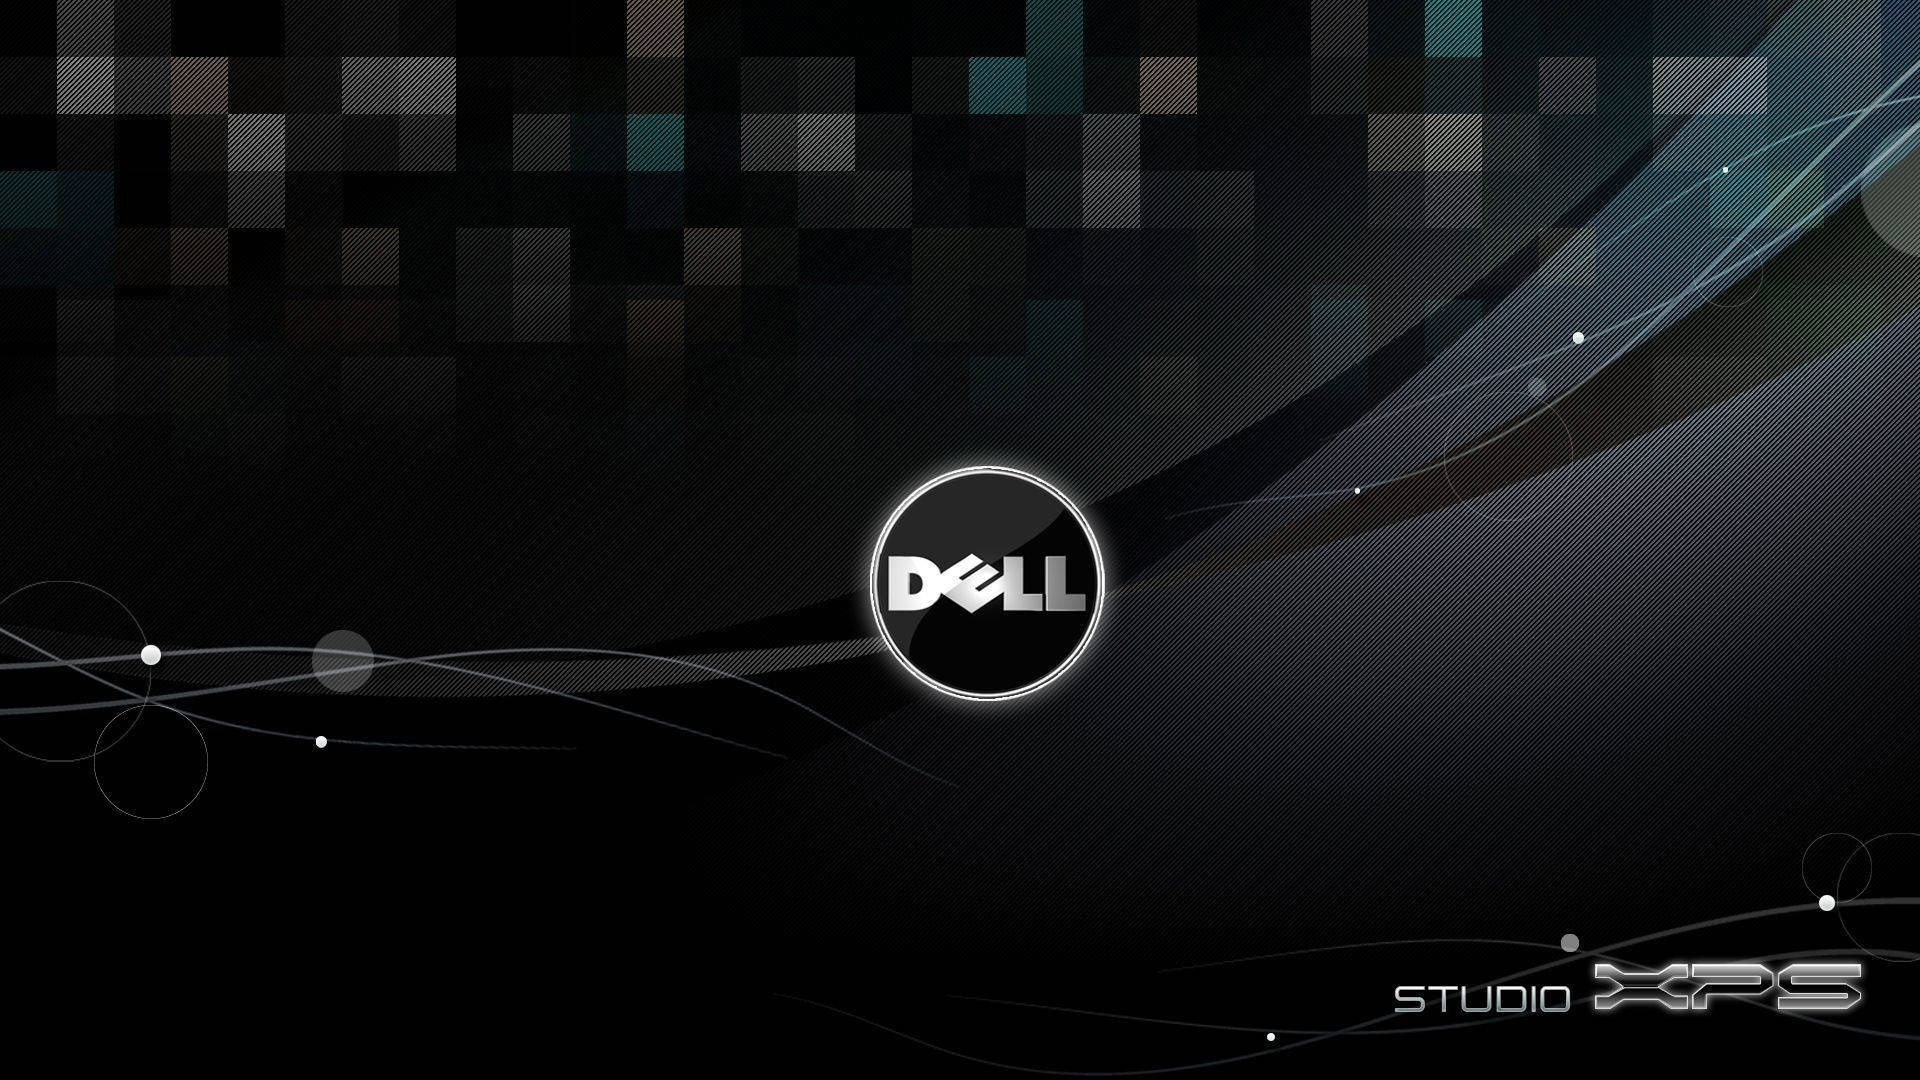 Studio Xps Dell Hd Logo Background